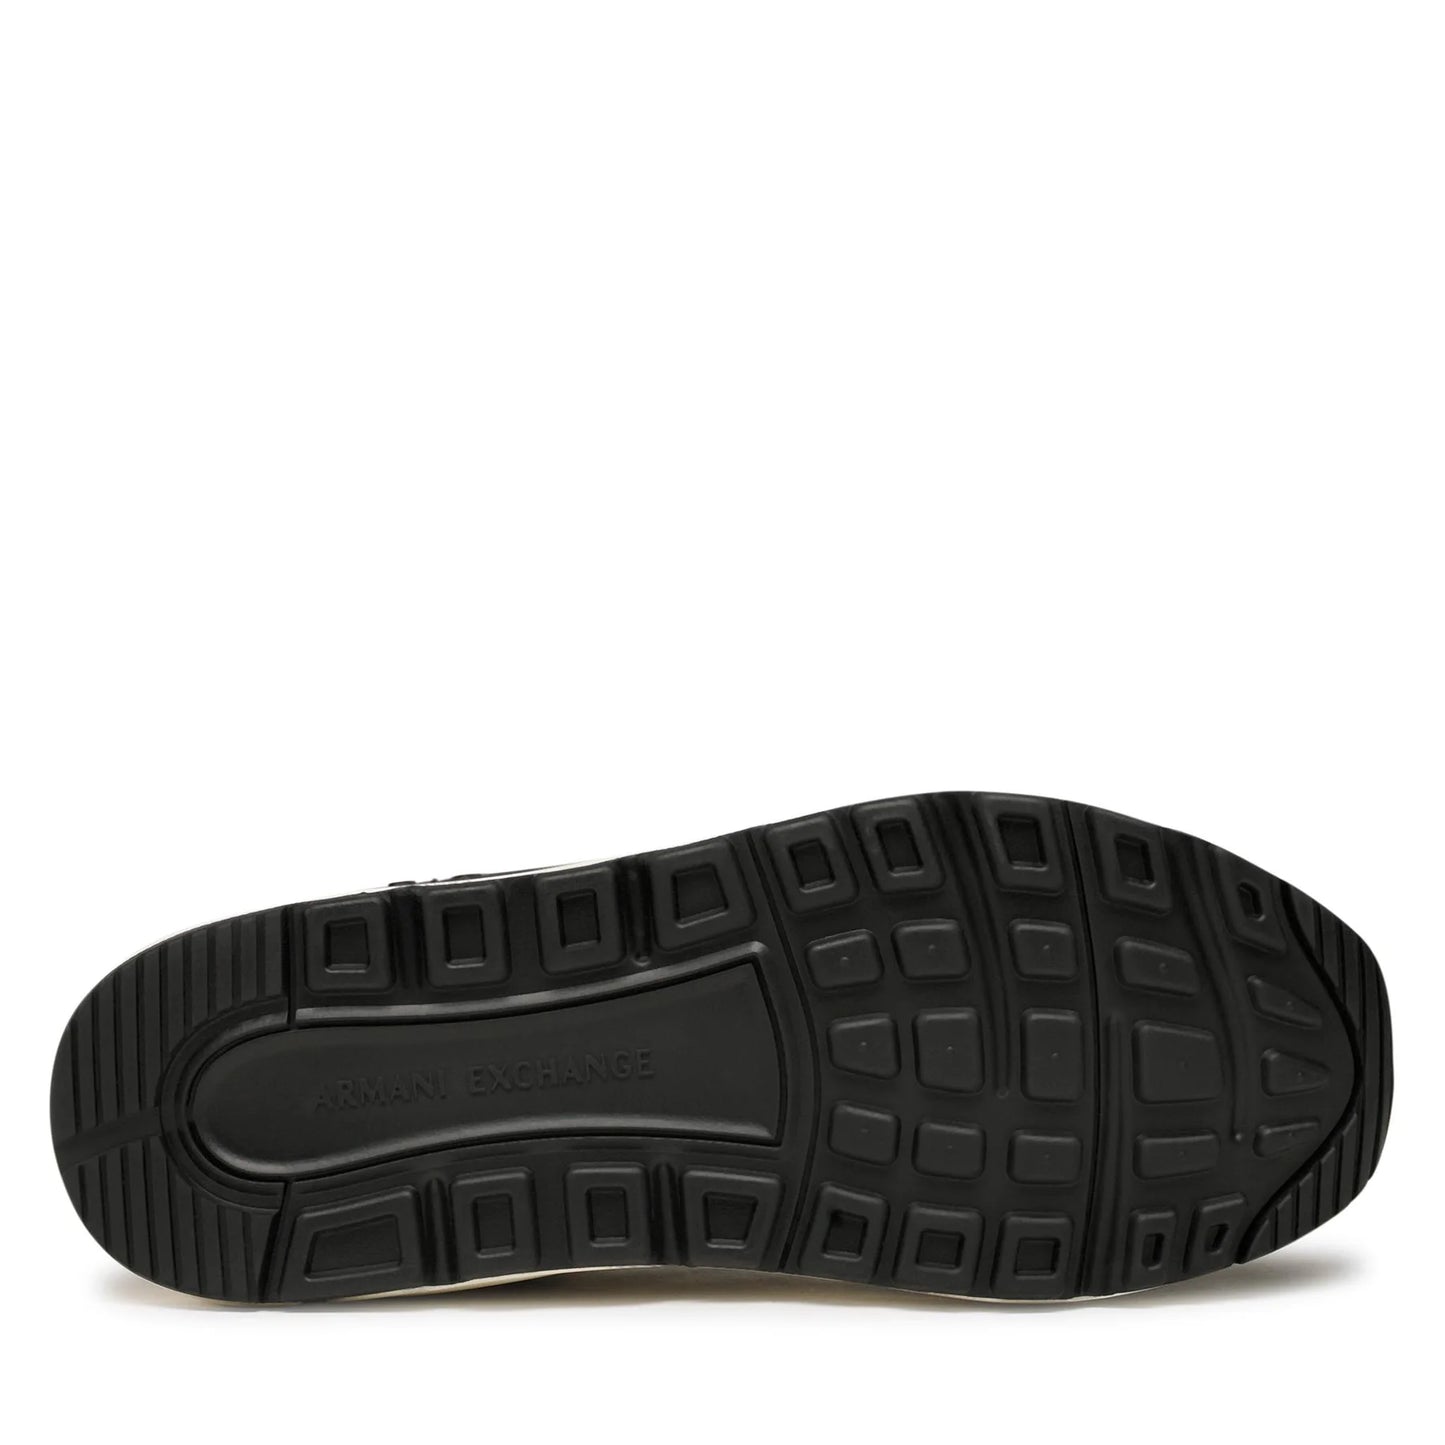 ARMANI EXCHANGE Sneakers Black/Off White